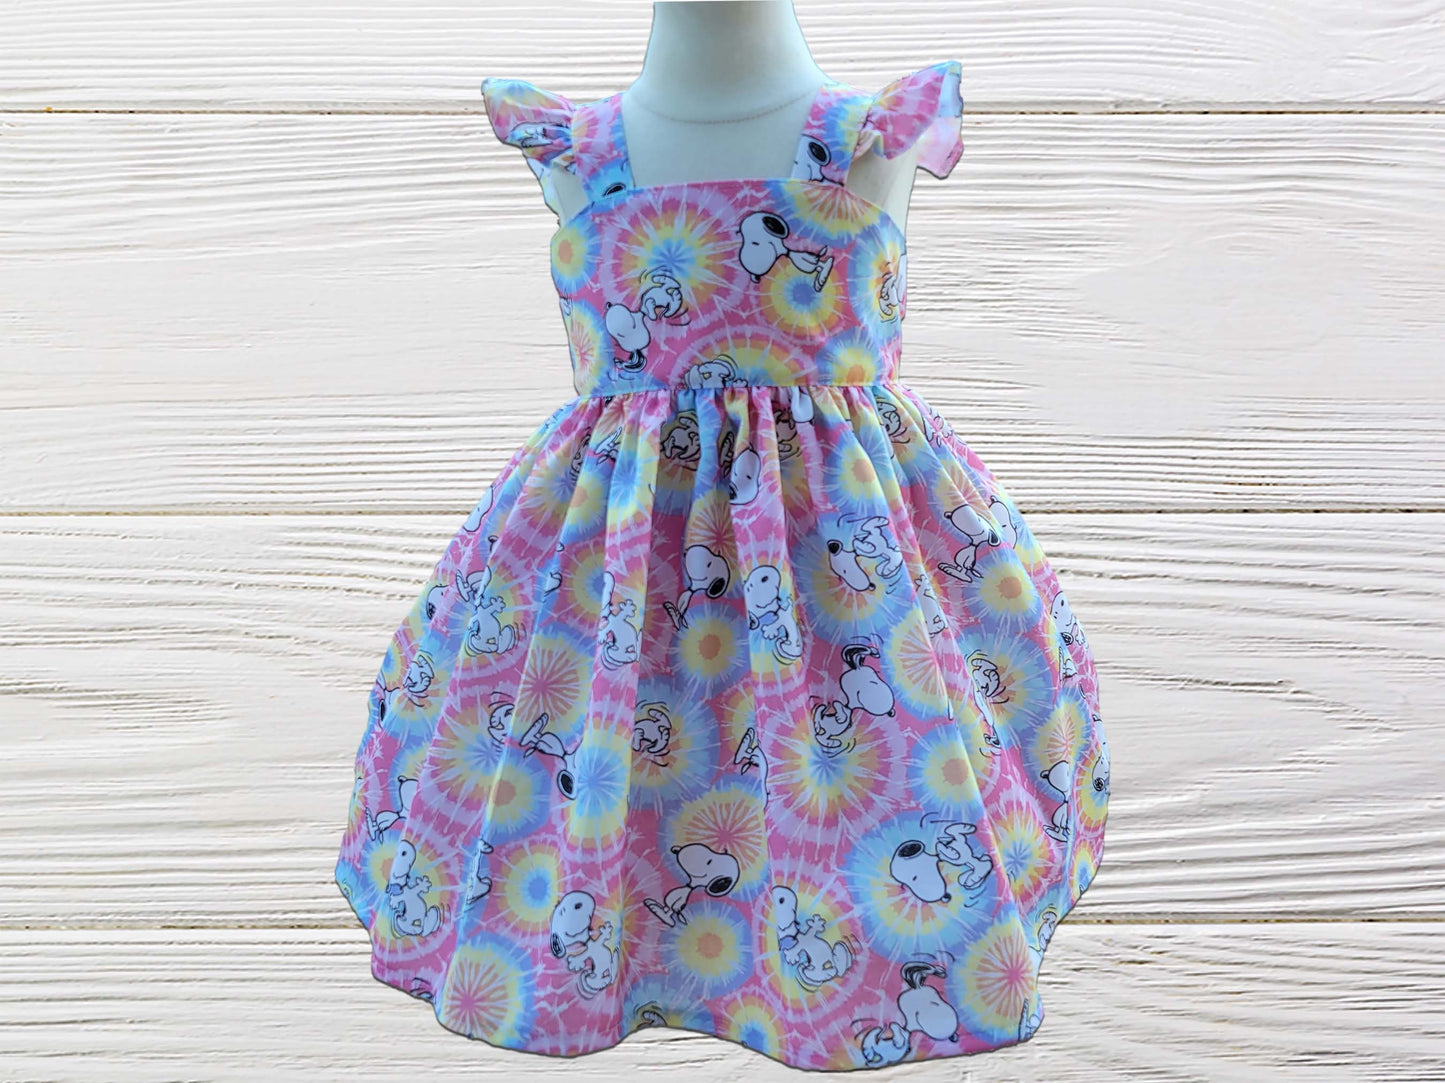 Snoopy Pink Tie Dye dress, Snoopy Toddler birthday dress, Snoopy Birthday dress, Girls dress, Toddler Snoopy dress, Birthday dress